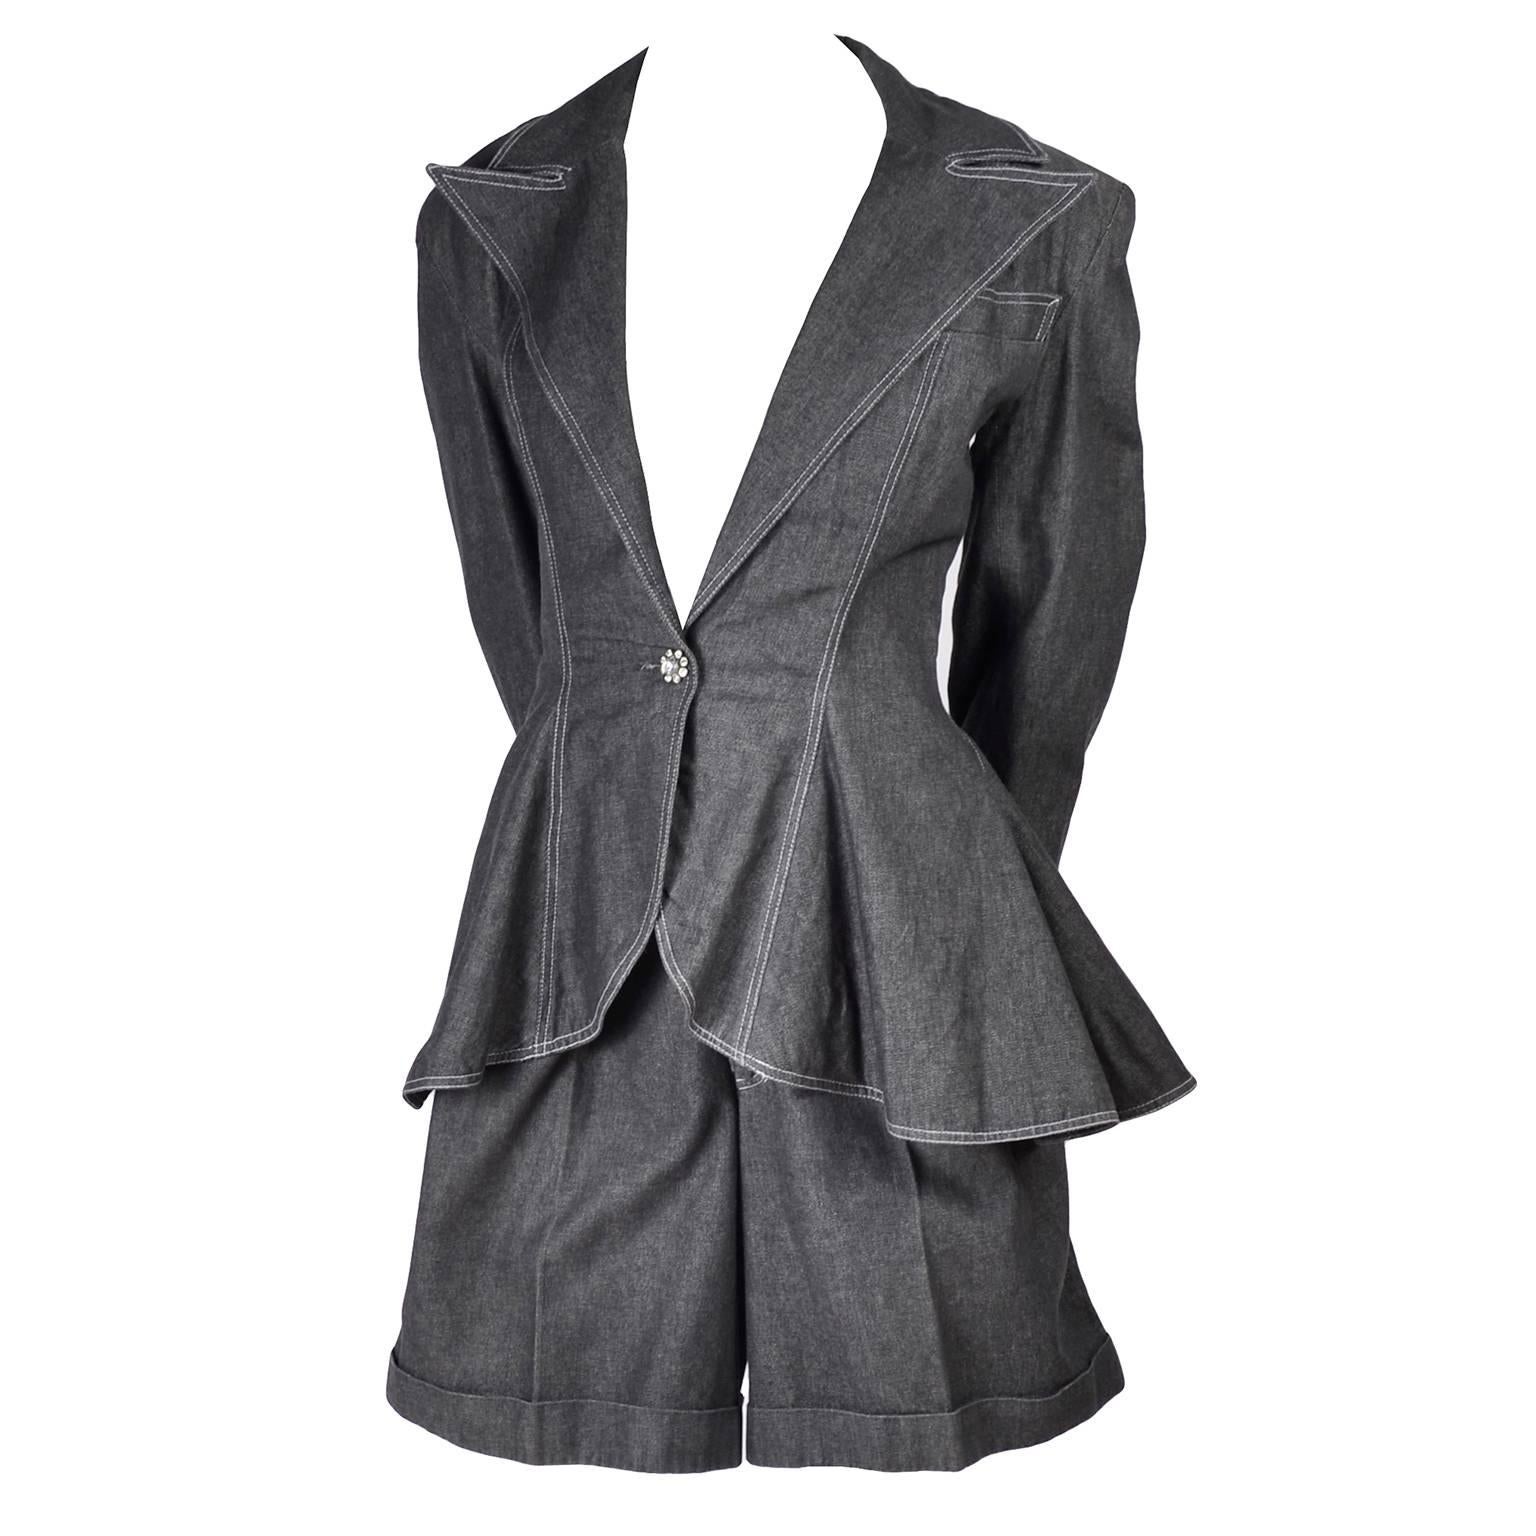 Women's 1980s Patrick Kelly Suit in Grayed Black Denim With Shorts & Peplum Jacket 4/6